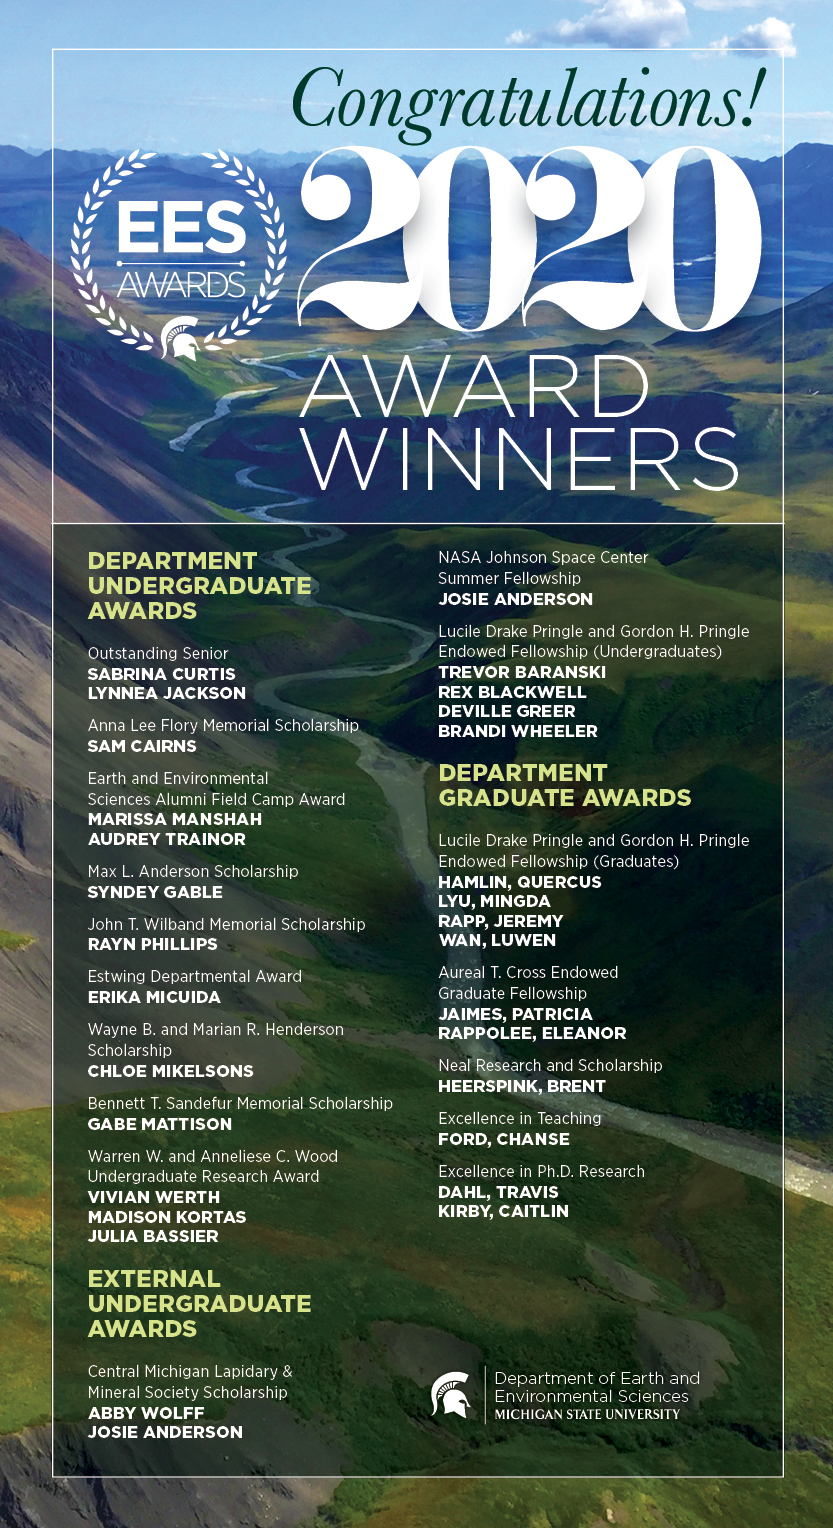 List of EES Daprtment Award Winners